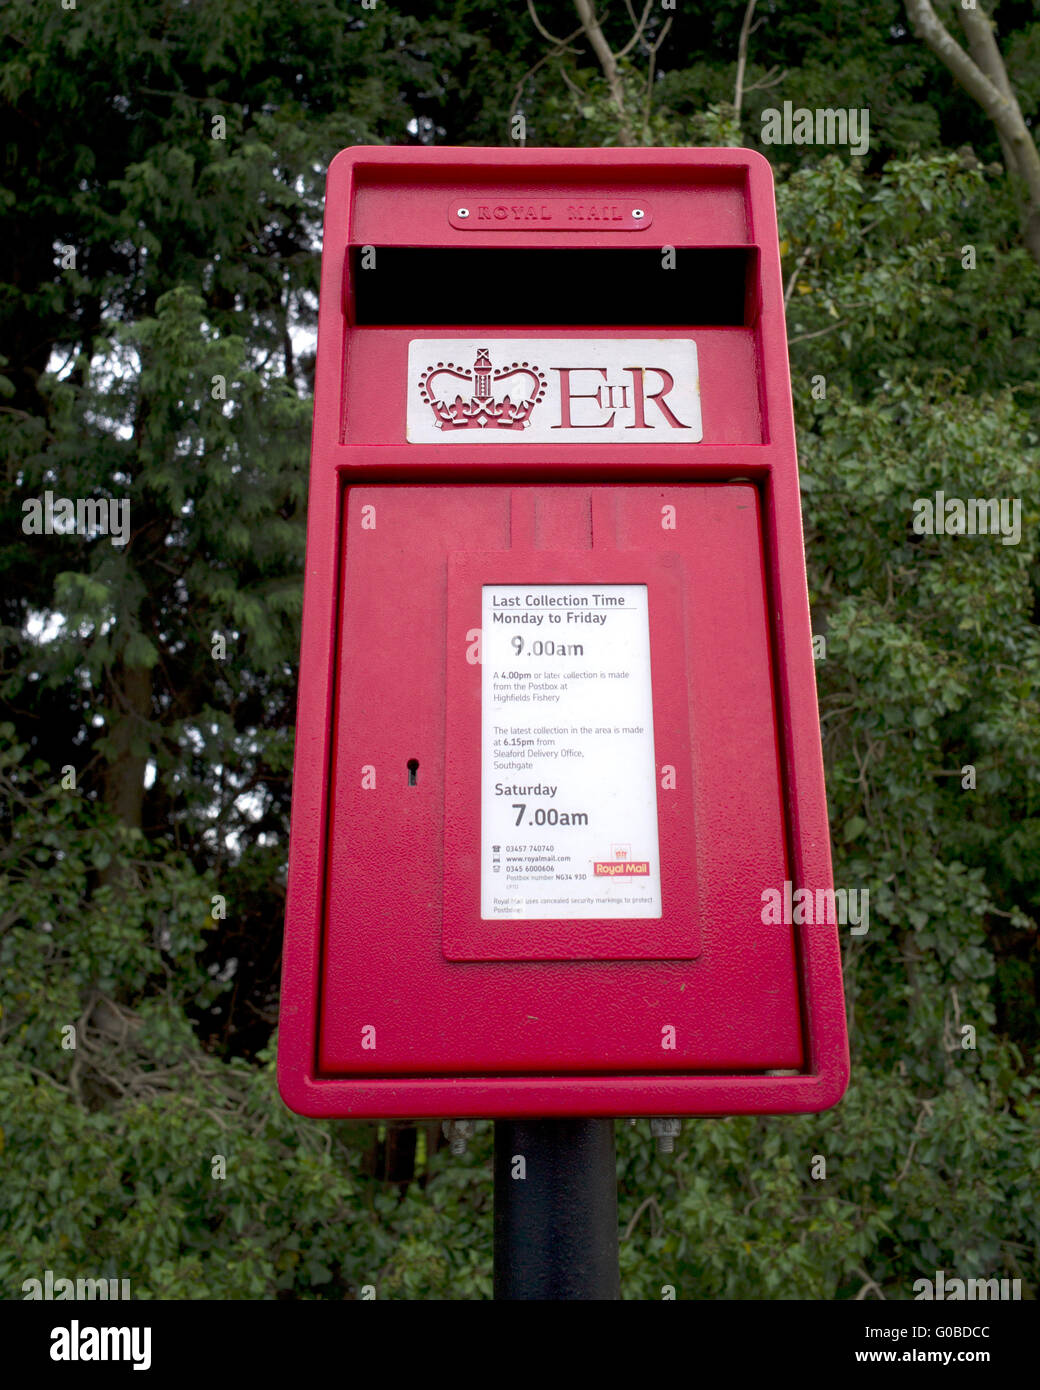 Royal Mail casella postale Inghilterra Foto Stock